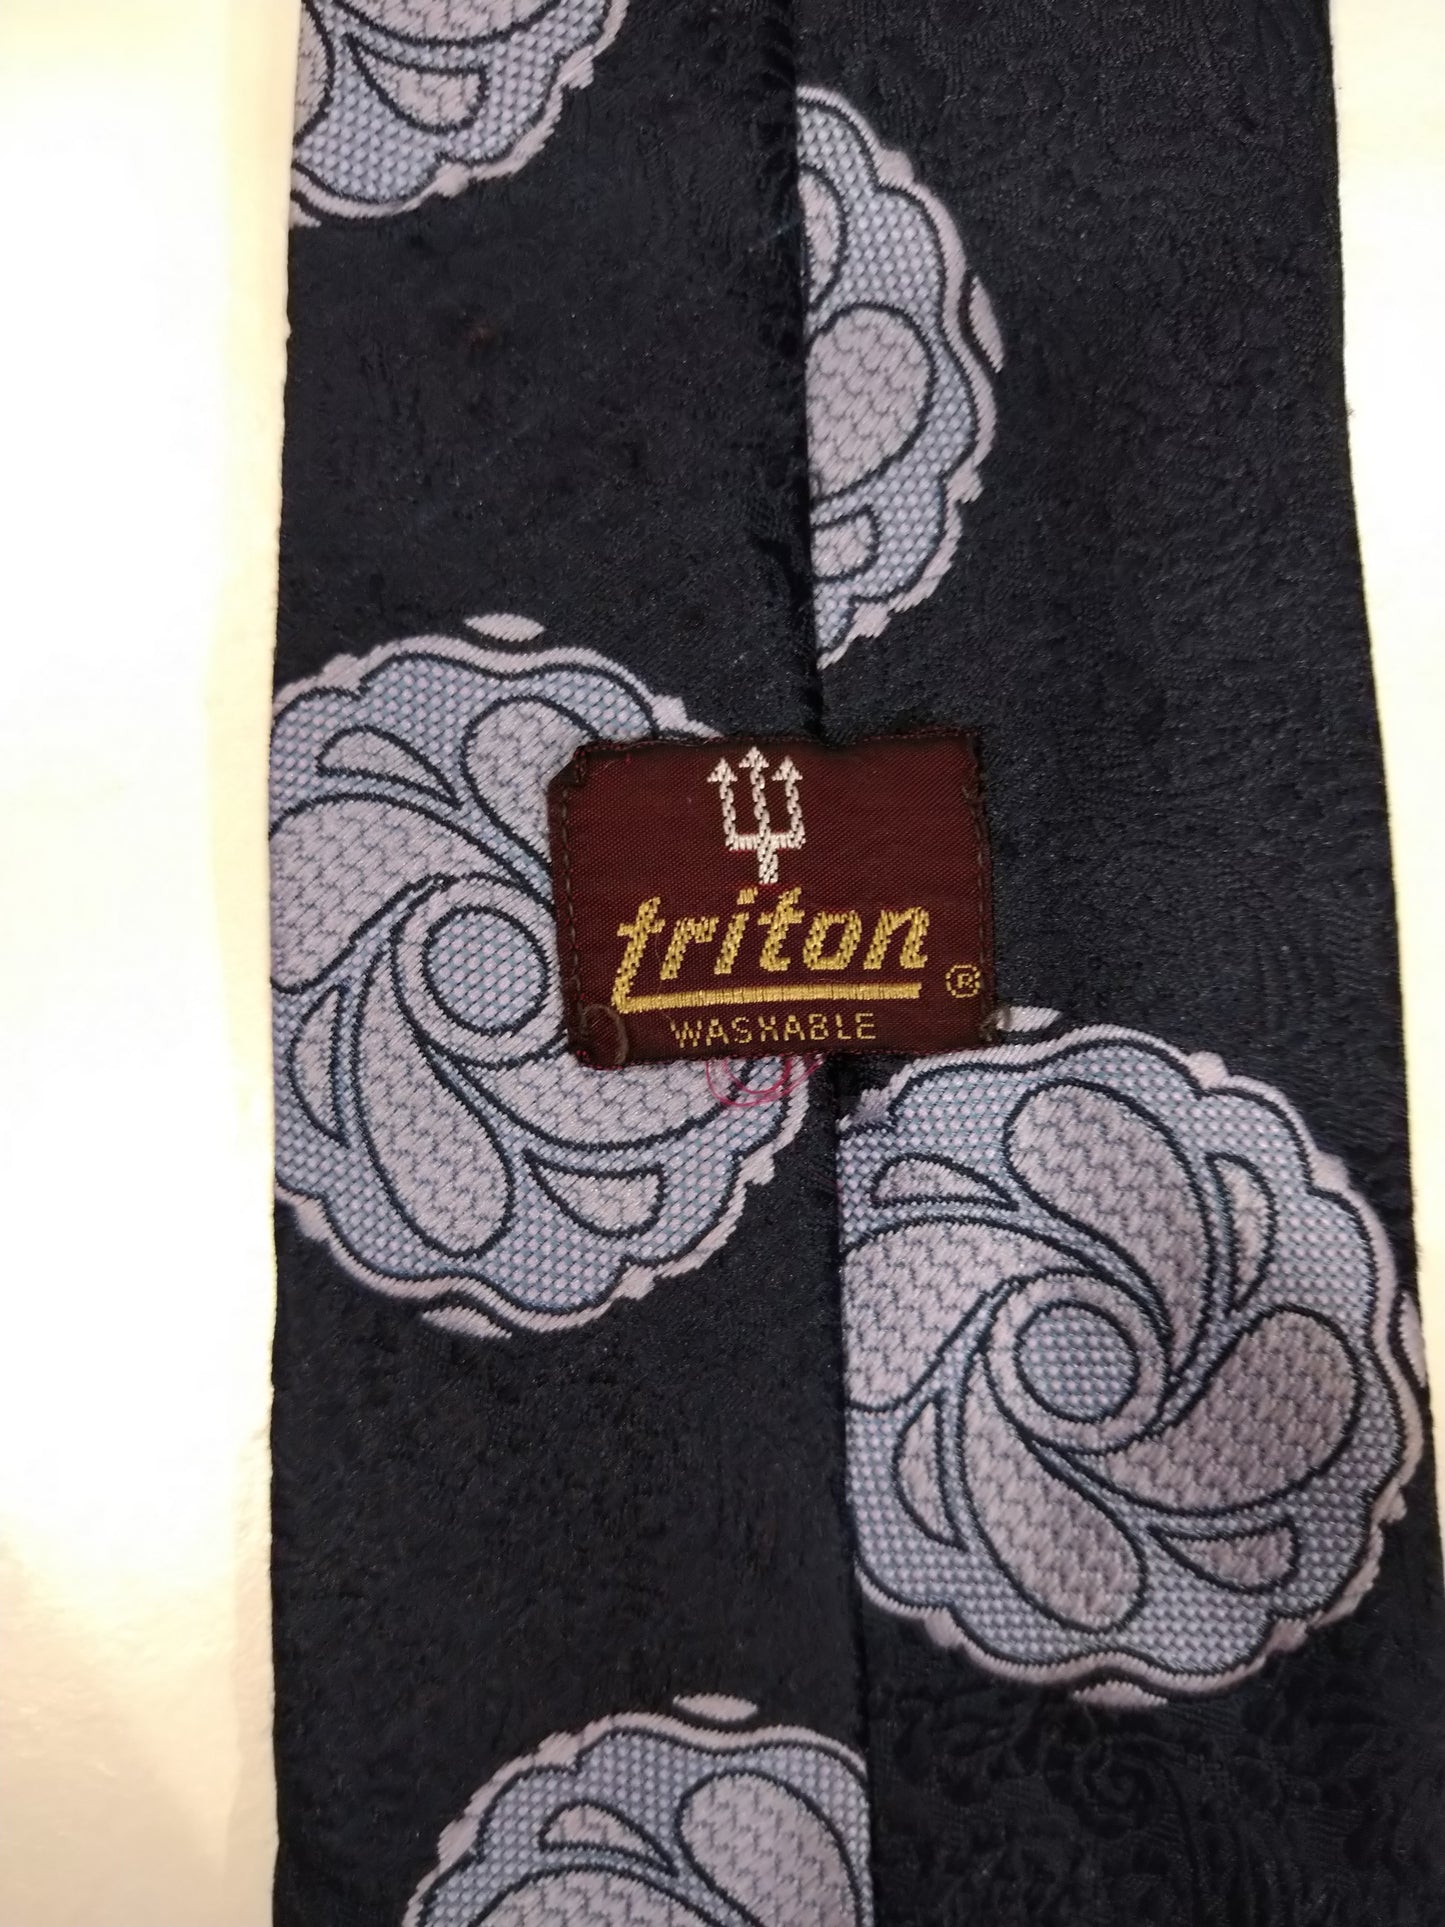 Vintage Triton Polyester tie. Nice blue / light blue vintage motif.